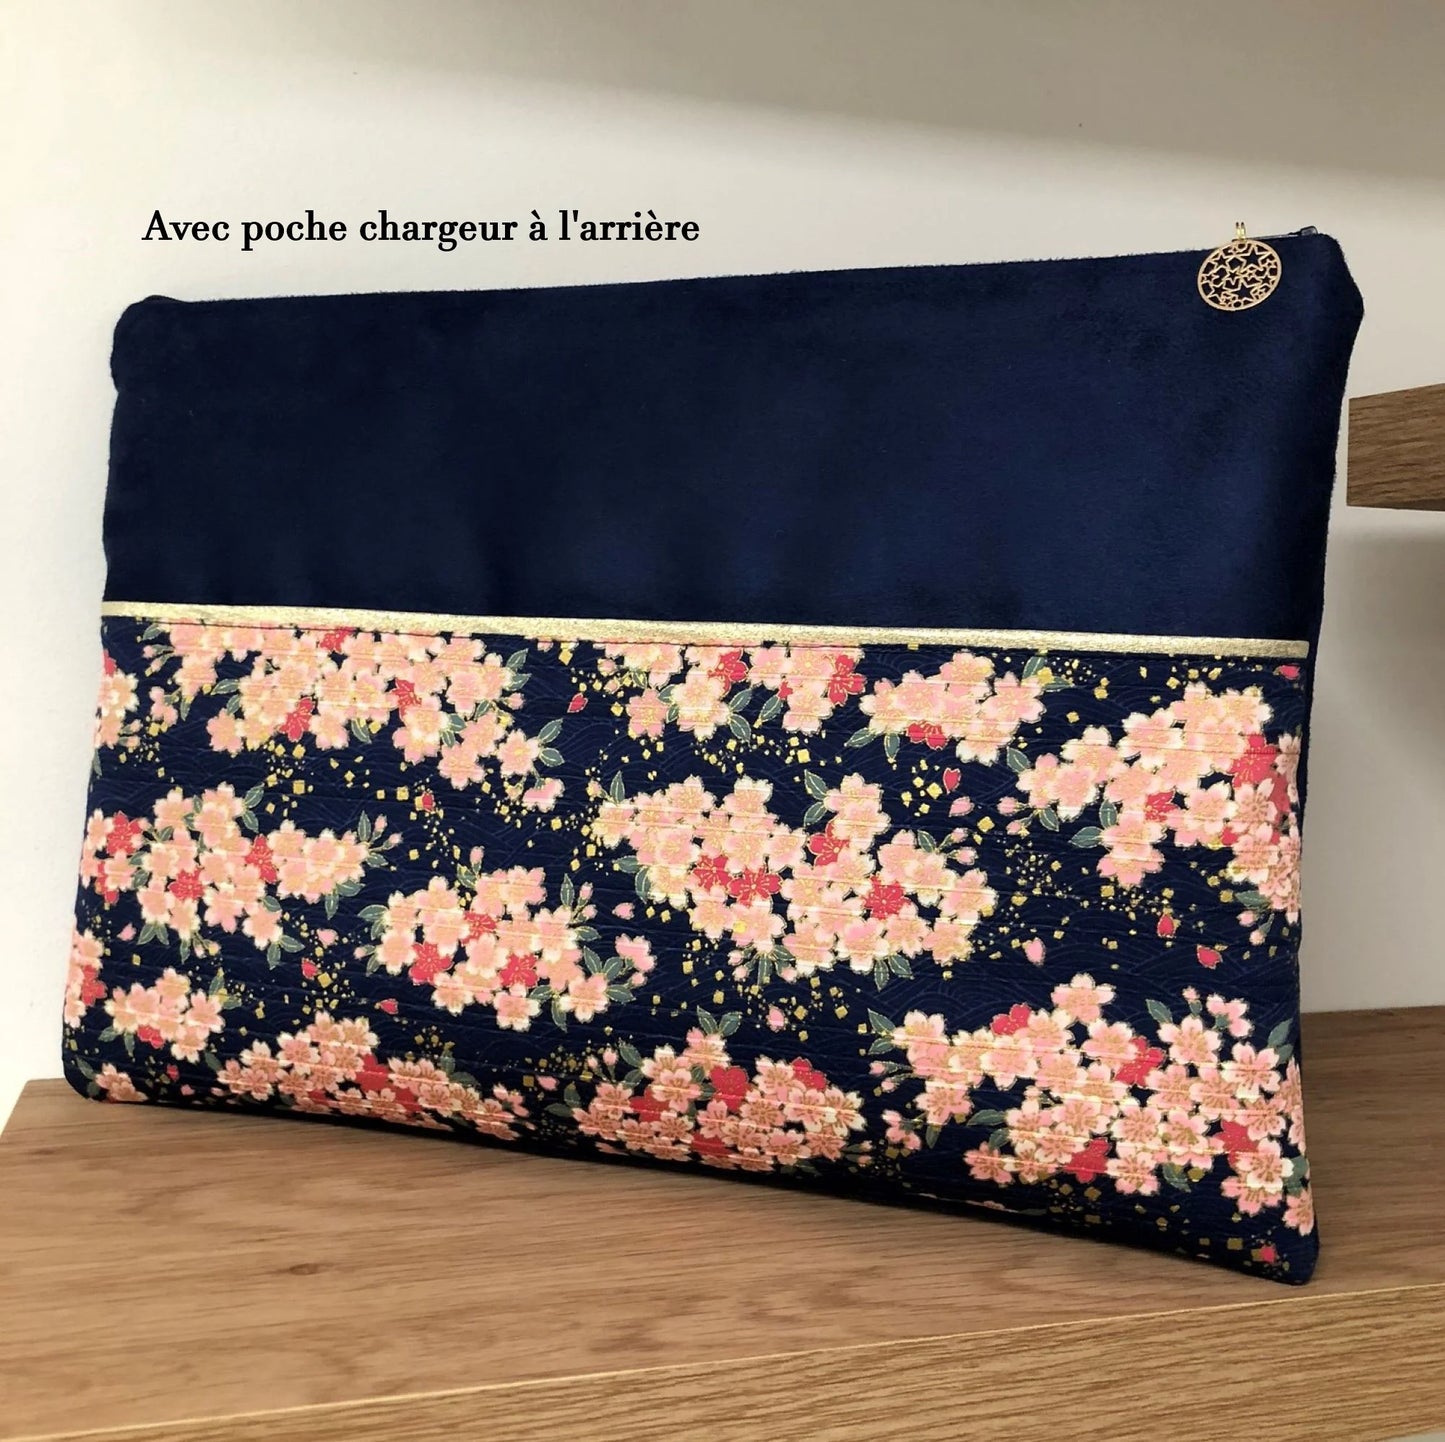 La pochette ordinateur bleu marine en tissu japonais fleuri